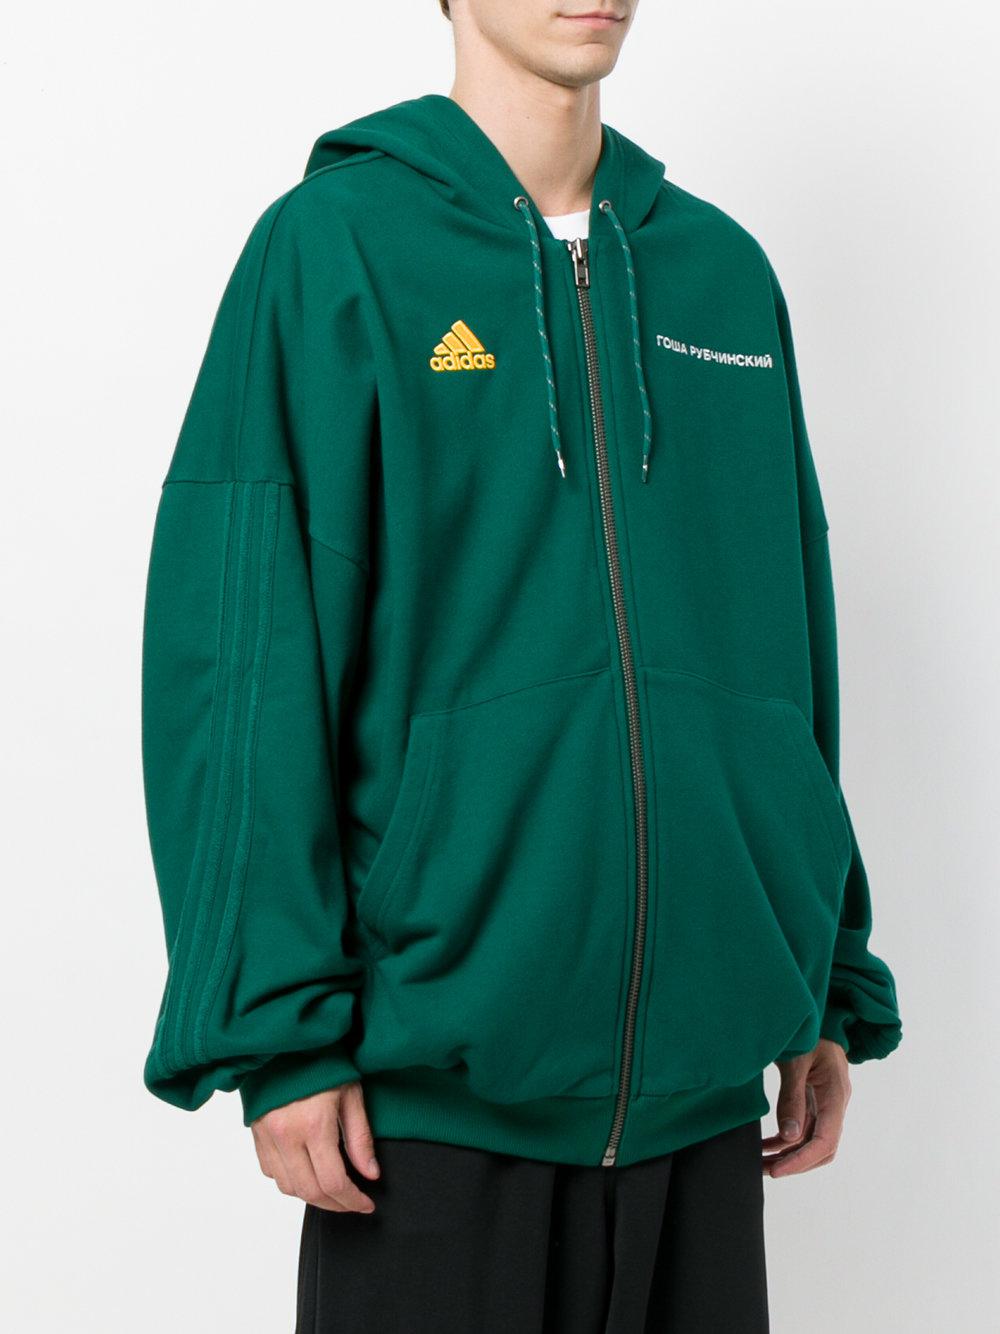 Gosha Rubchinskiy Cotton Adidas Zipped Jacket in Green for Men - Lyst